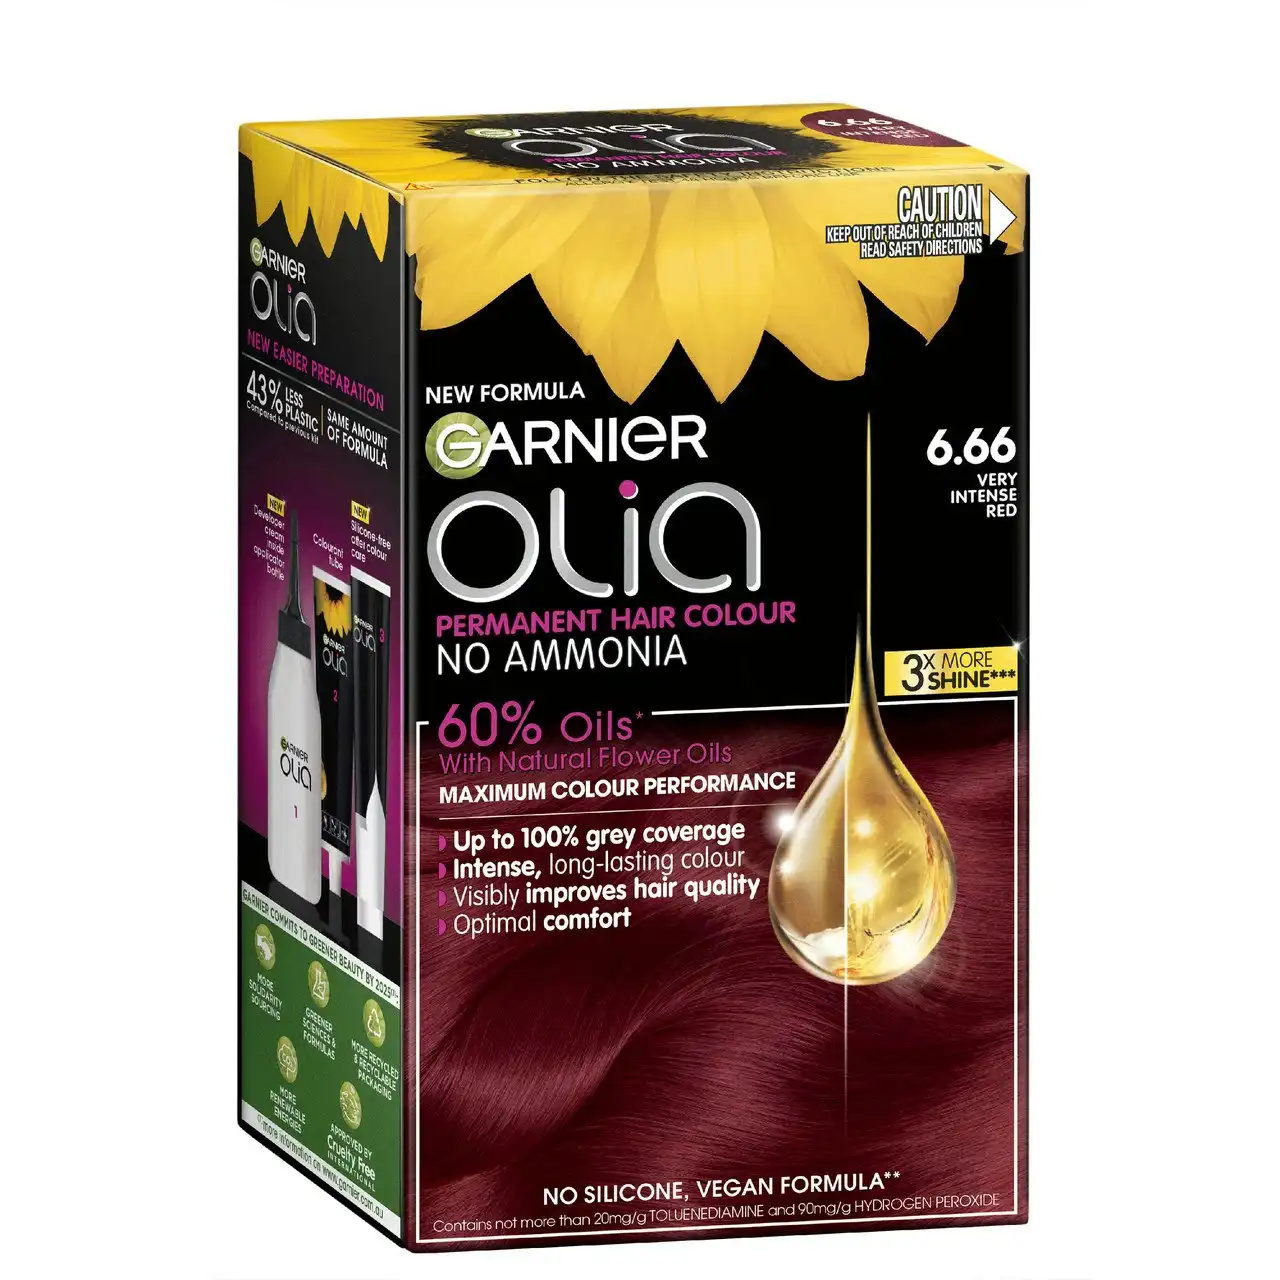 Garnier Olia 6.66 Very Intense Red Permanent Hair Colour No Ammonia, 60% Oils